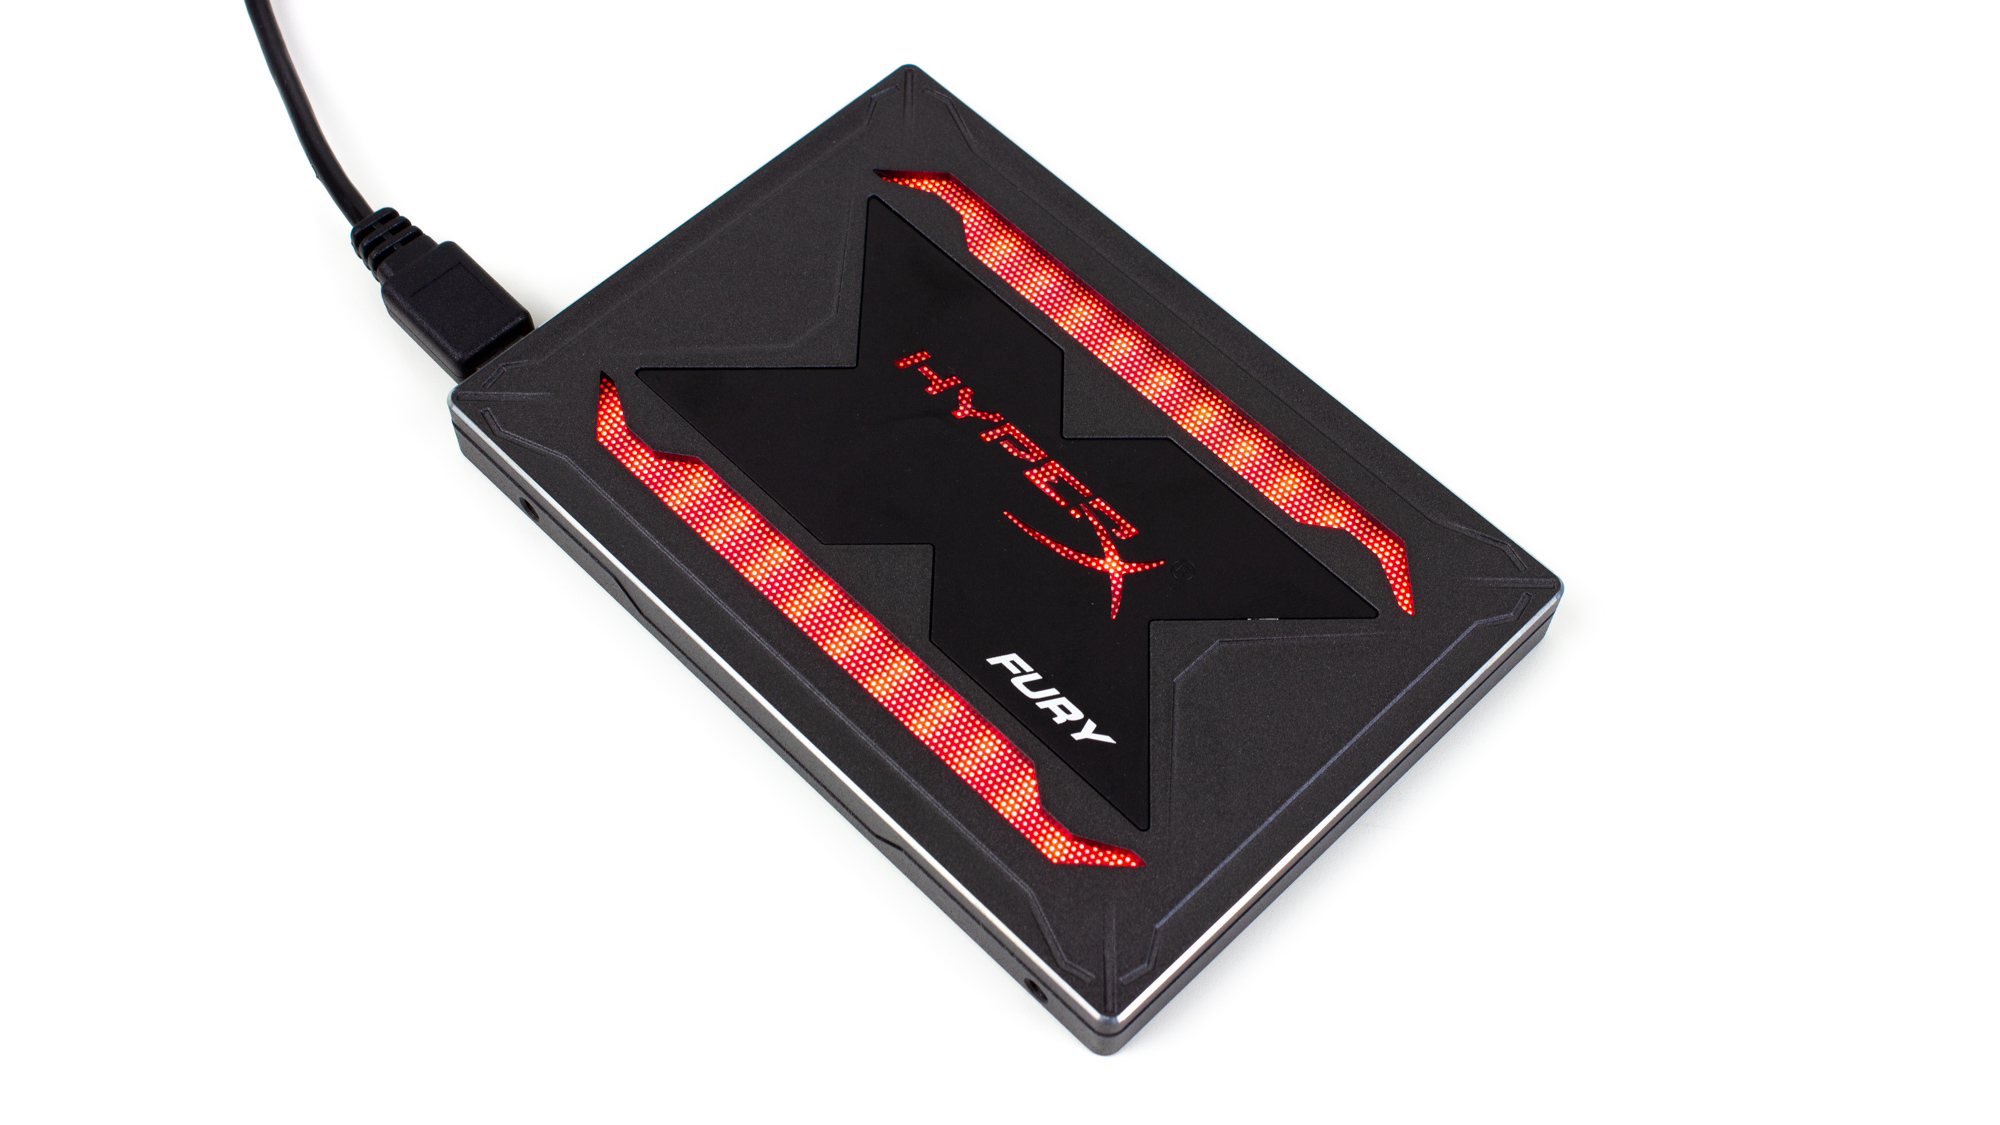 HyperX Fury RGB SSD 480 GB - Rote Beleuchtung